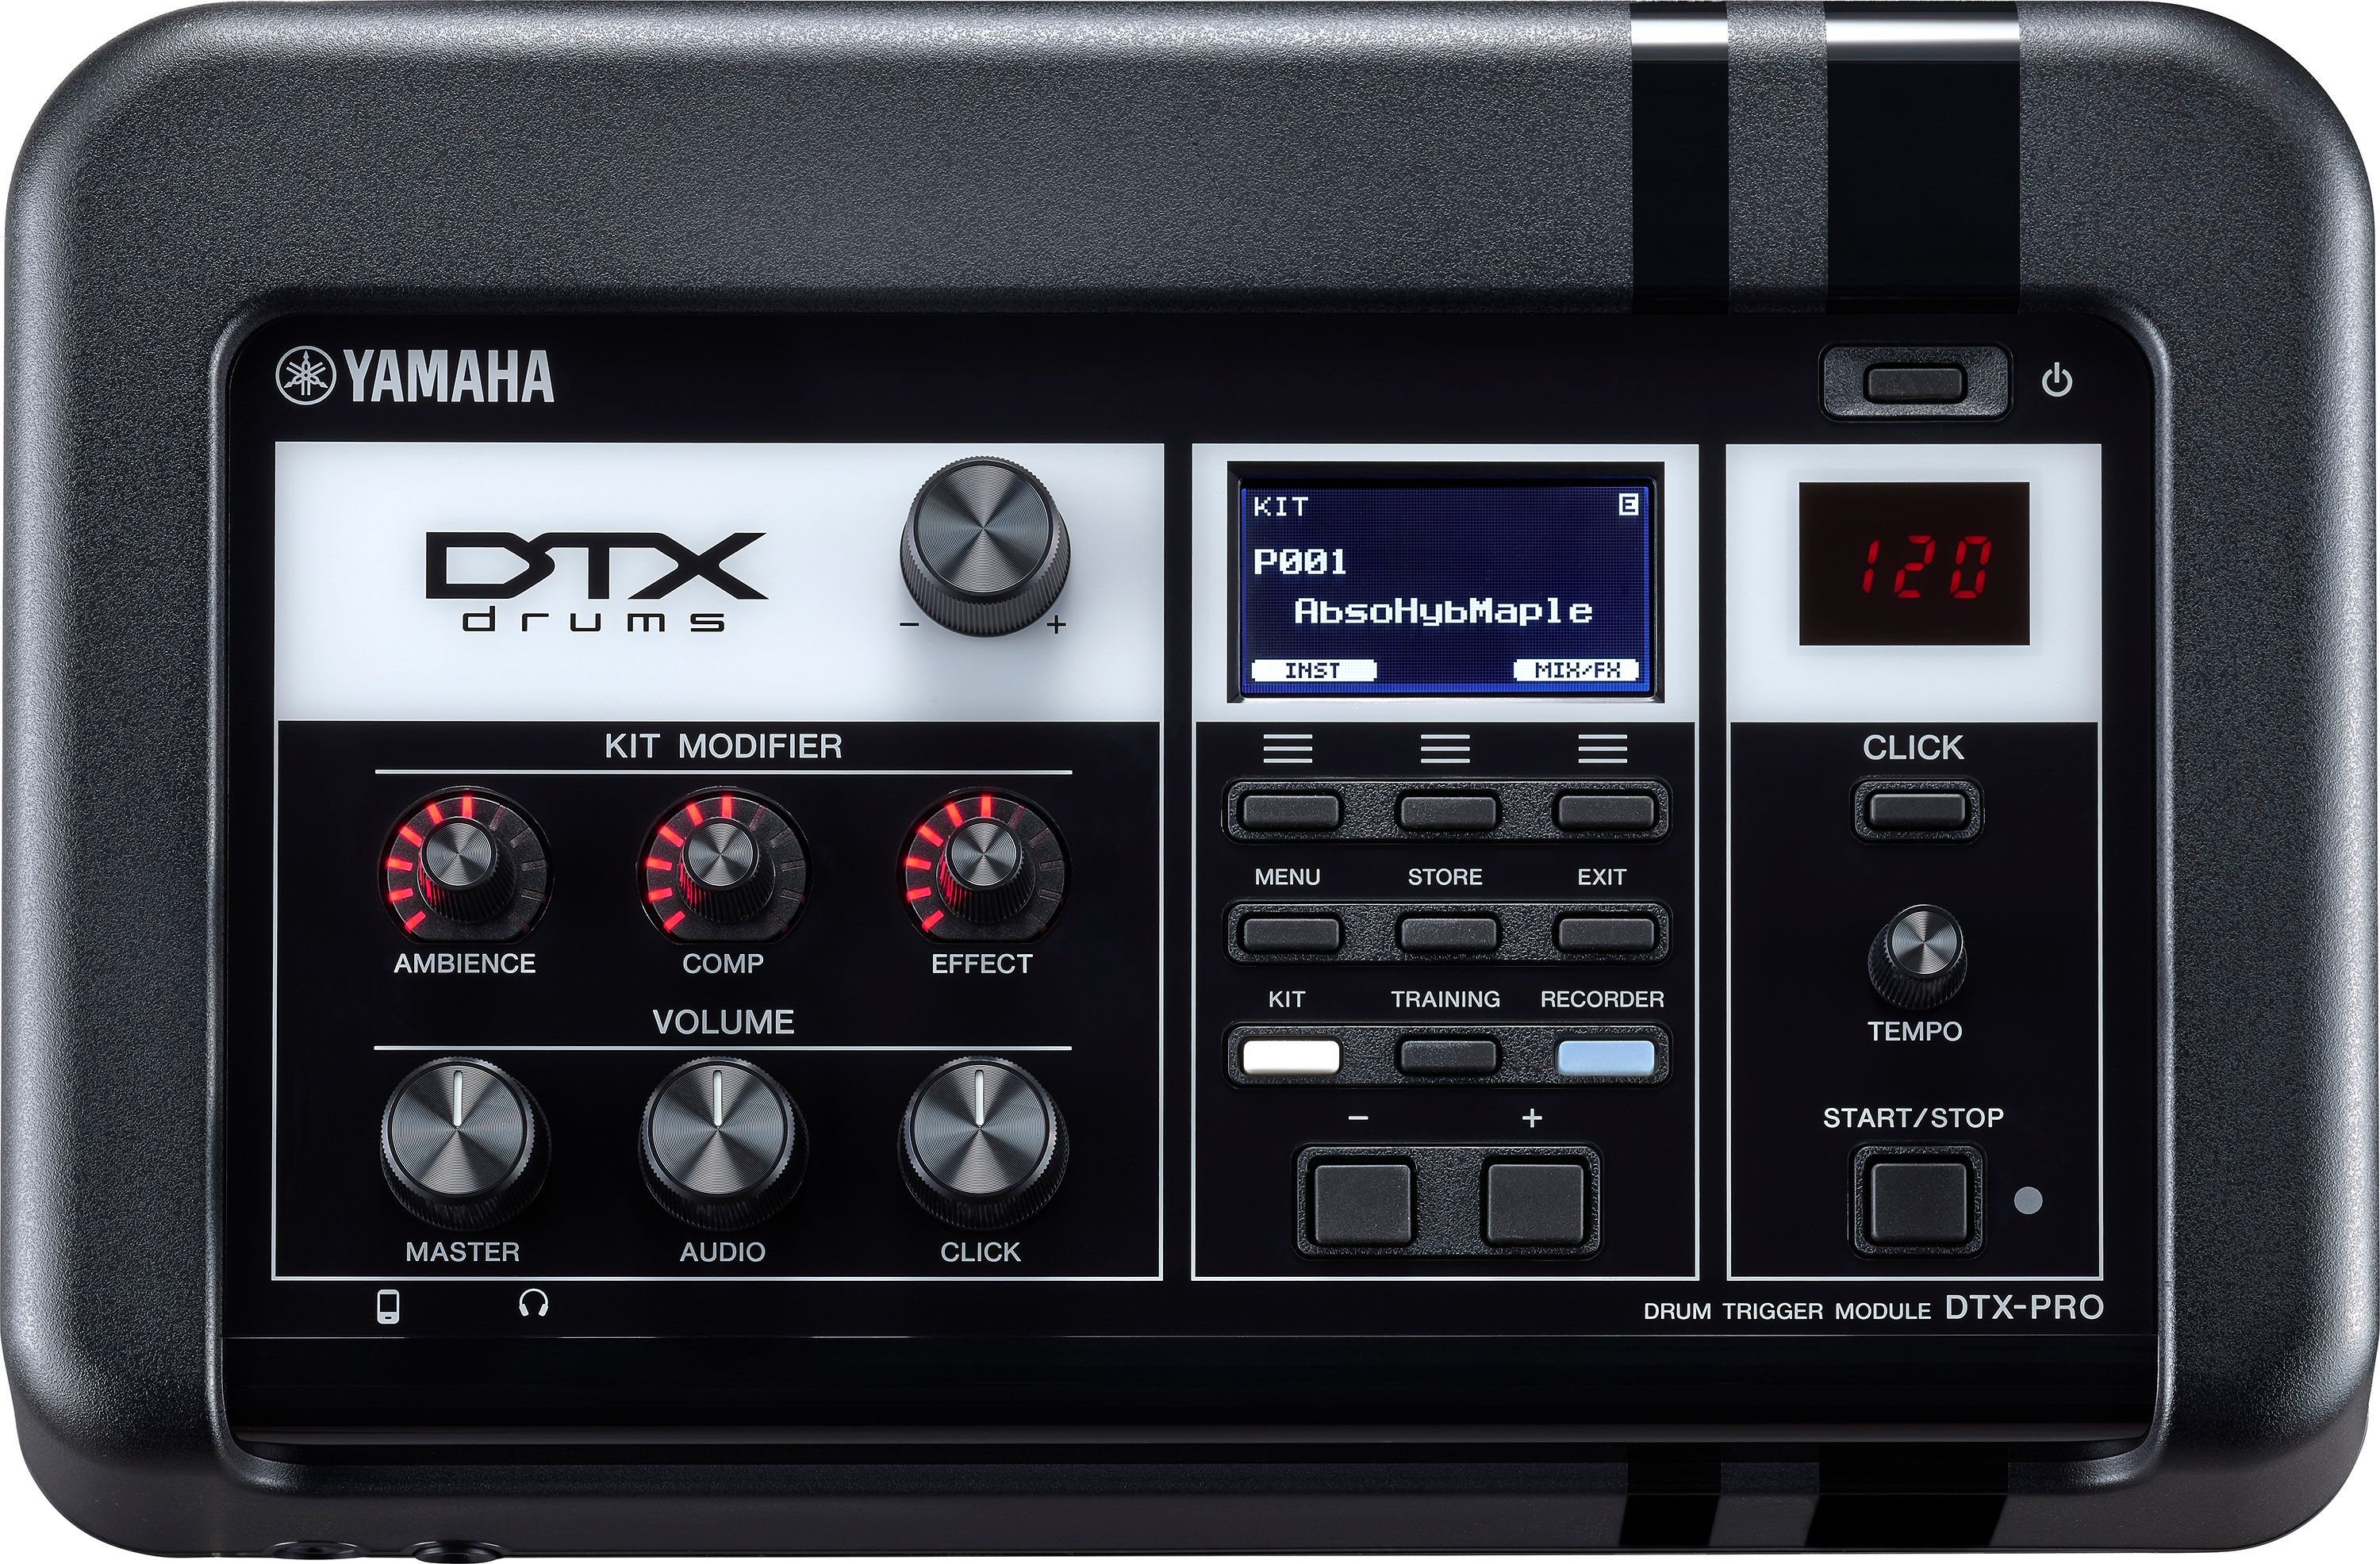 Yamaha Jdtx6 Kx Electronic Drum Kit - Komplett E-Drum Set - Variation 2